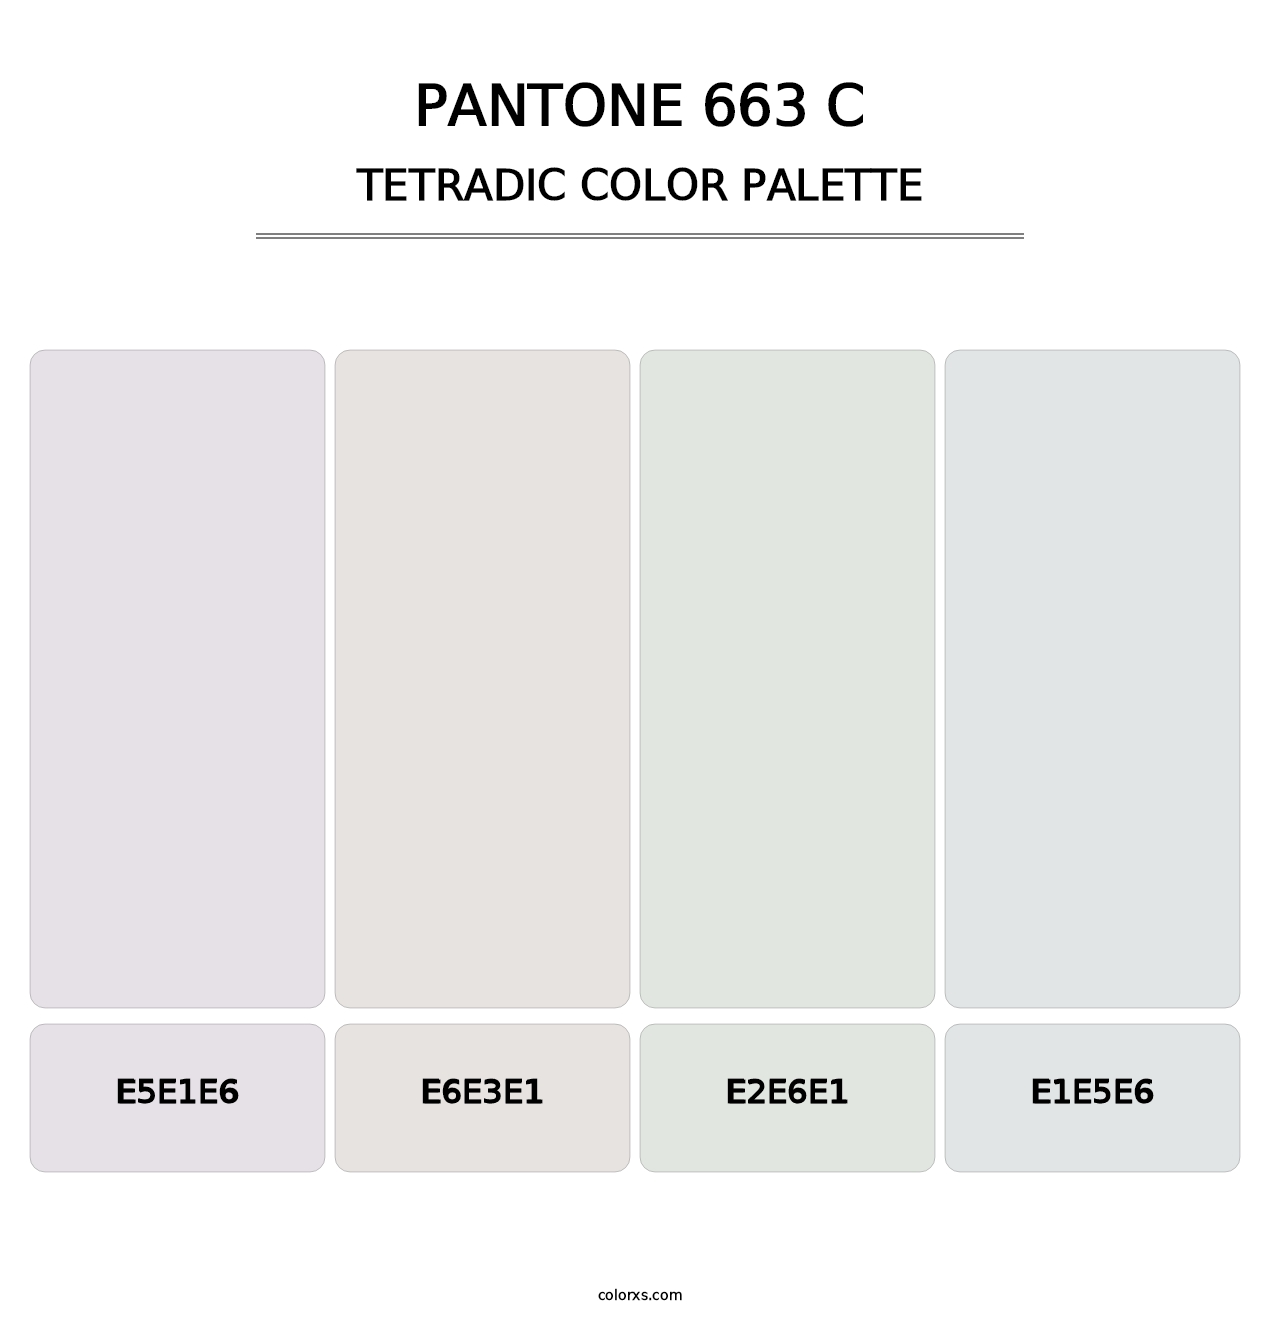 PANTONE 663 C - Tetradic Color Palette